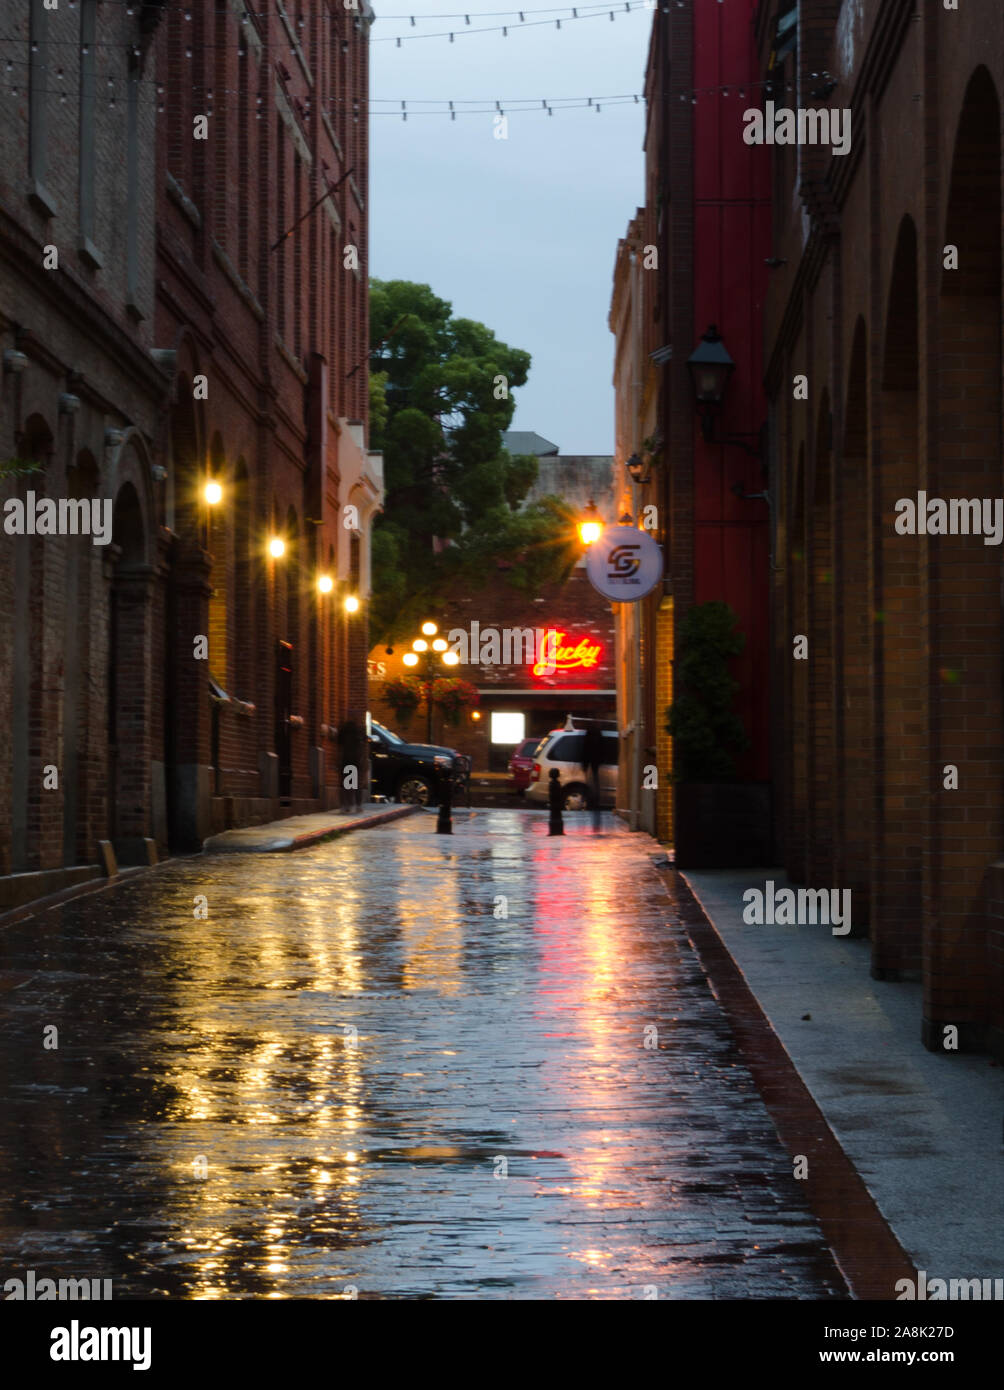 A rainy back alley in Victoria, BC, Canada Stock Photo